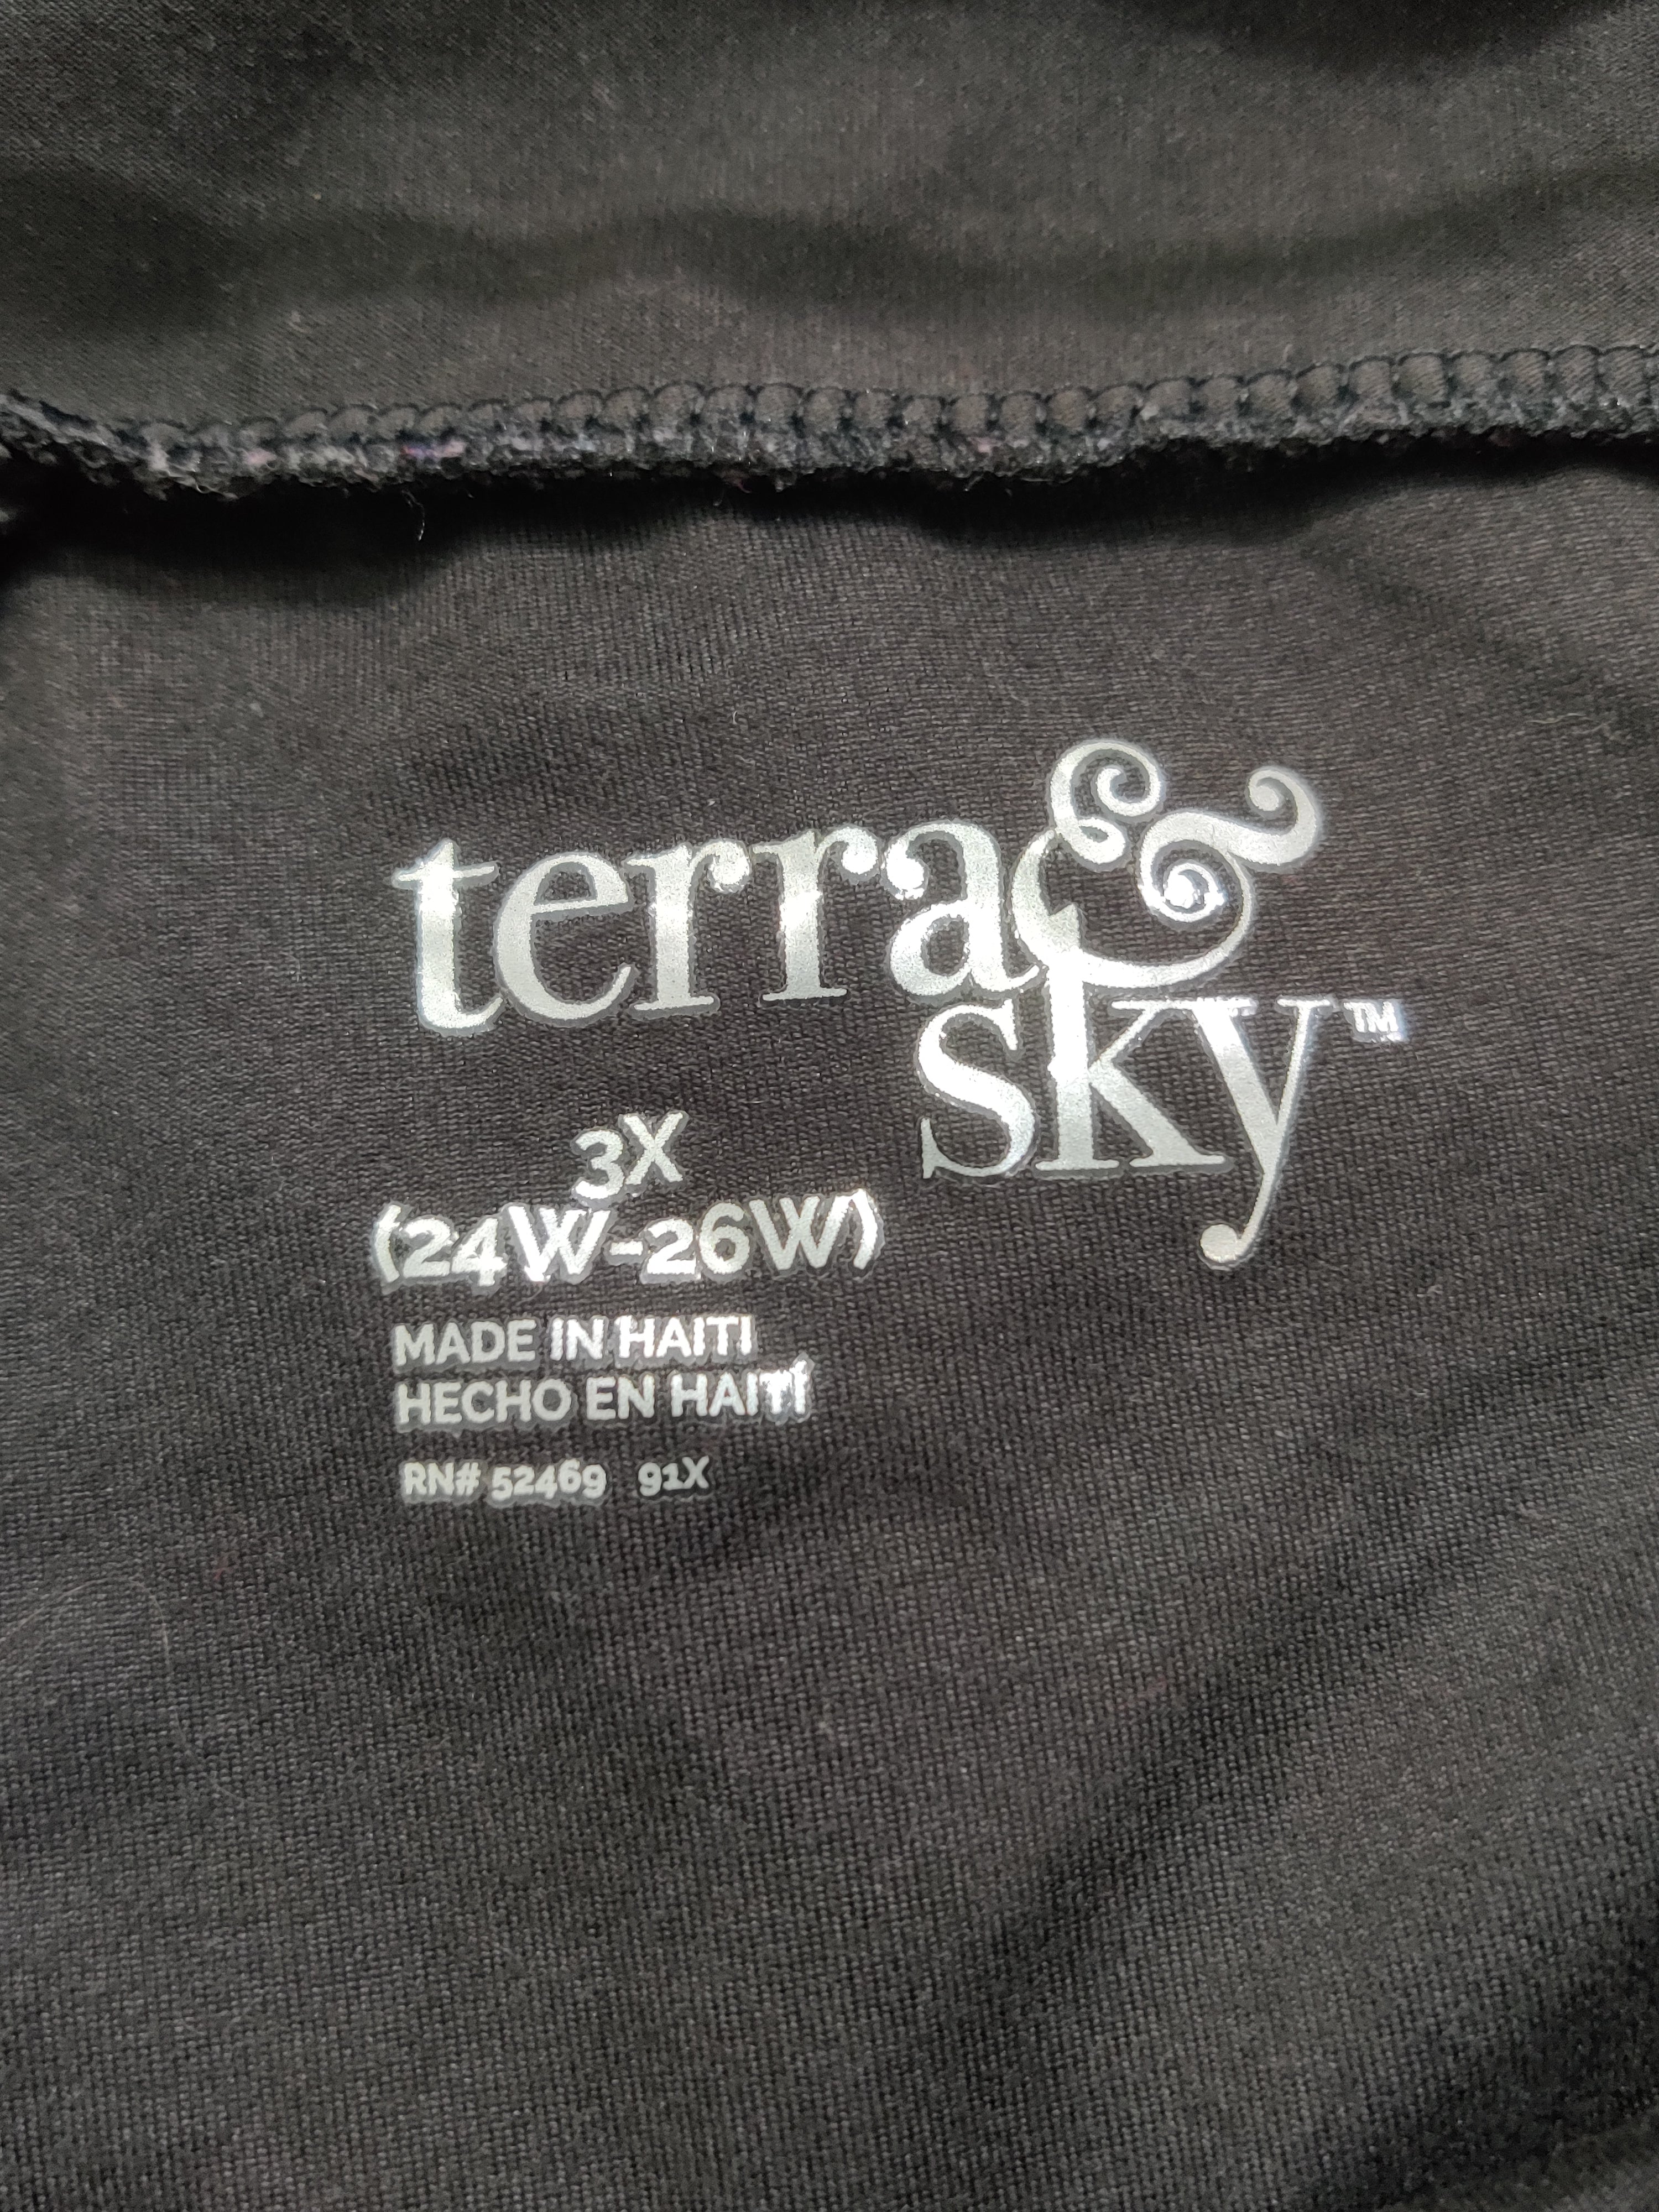 Terra Sky Branded Original Sports Stretch Gym tights For Women